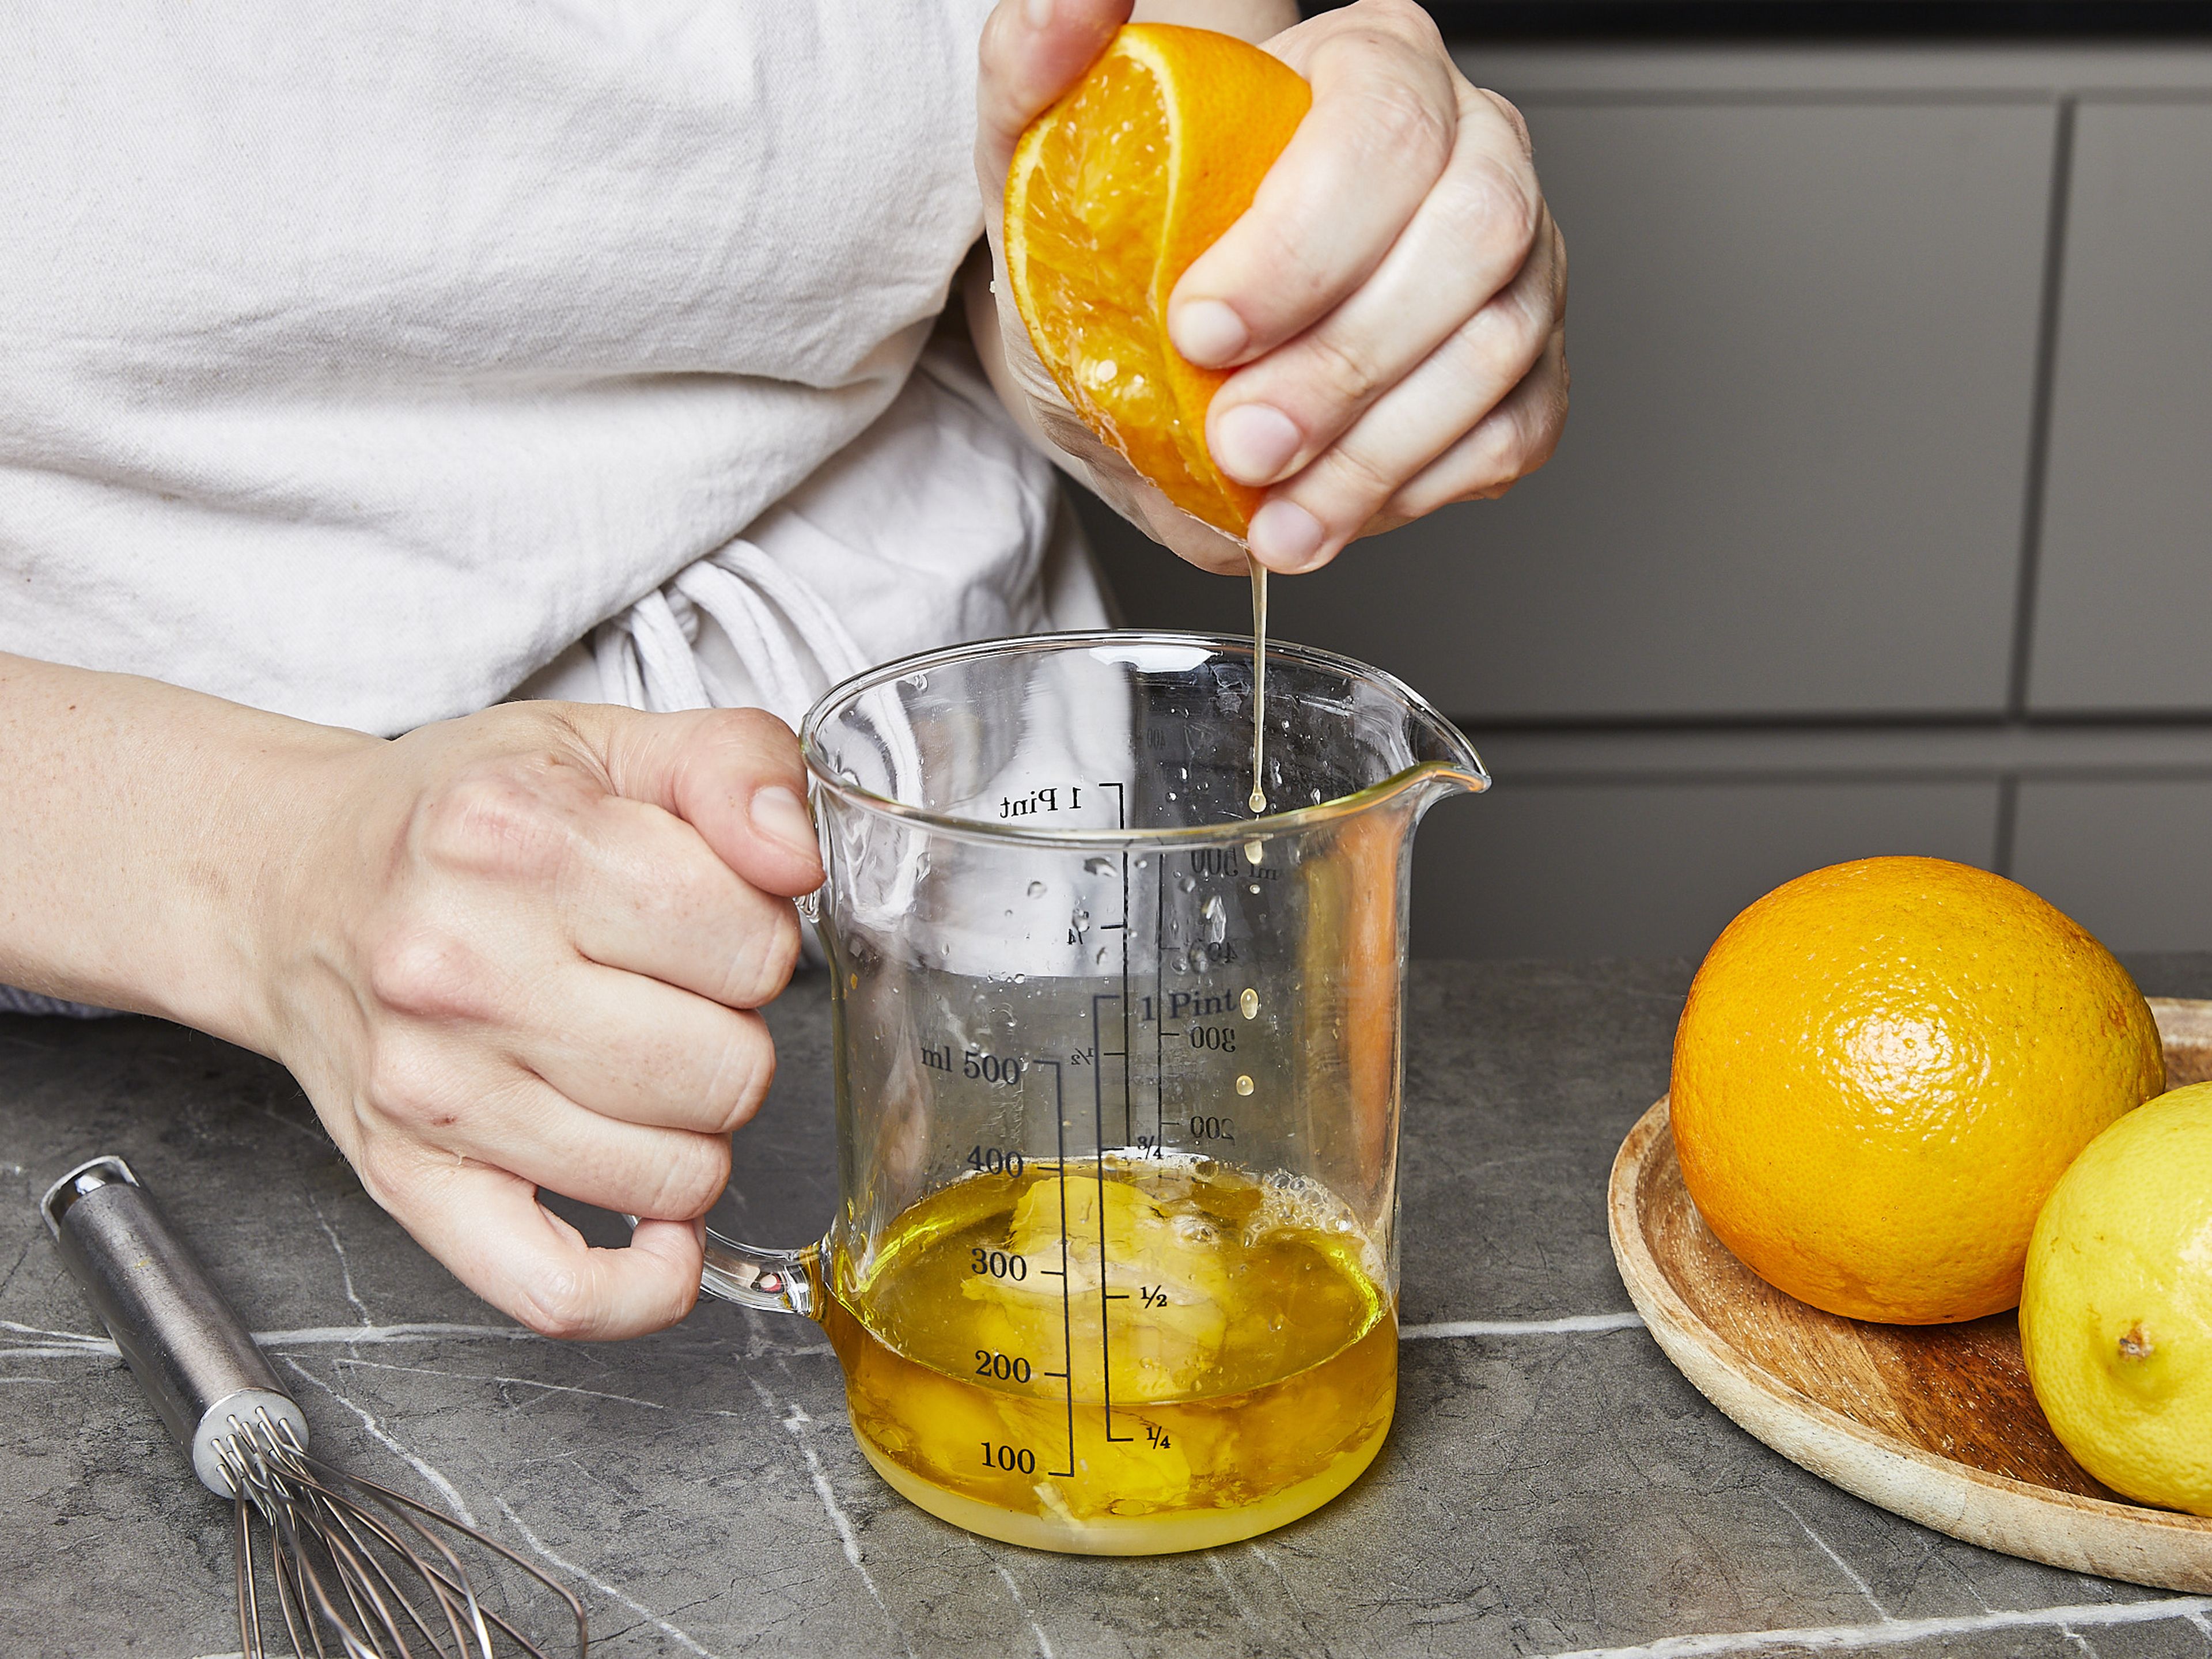 Prepare vinaigrette by stirring olive oil, mustard, lemon juice, and remaining orange juice together. Season with salt and pepper.